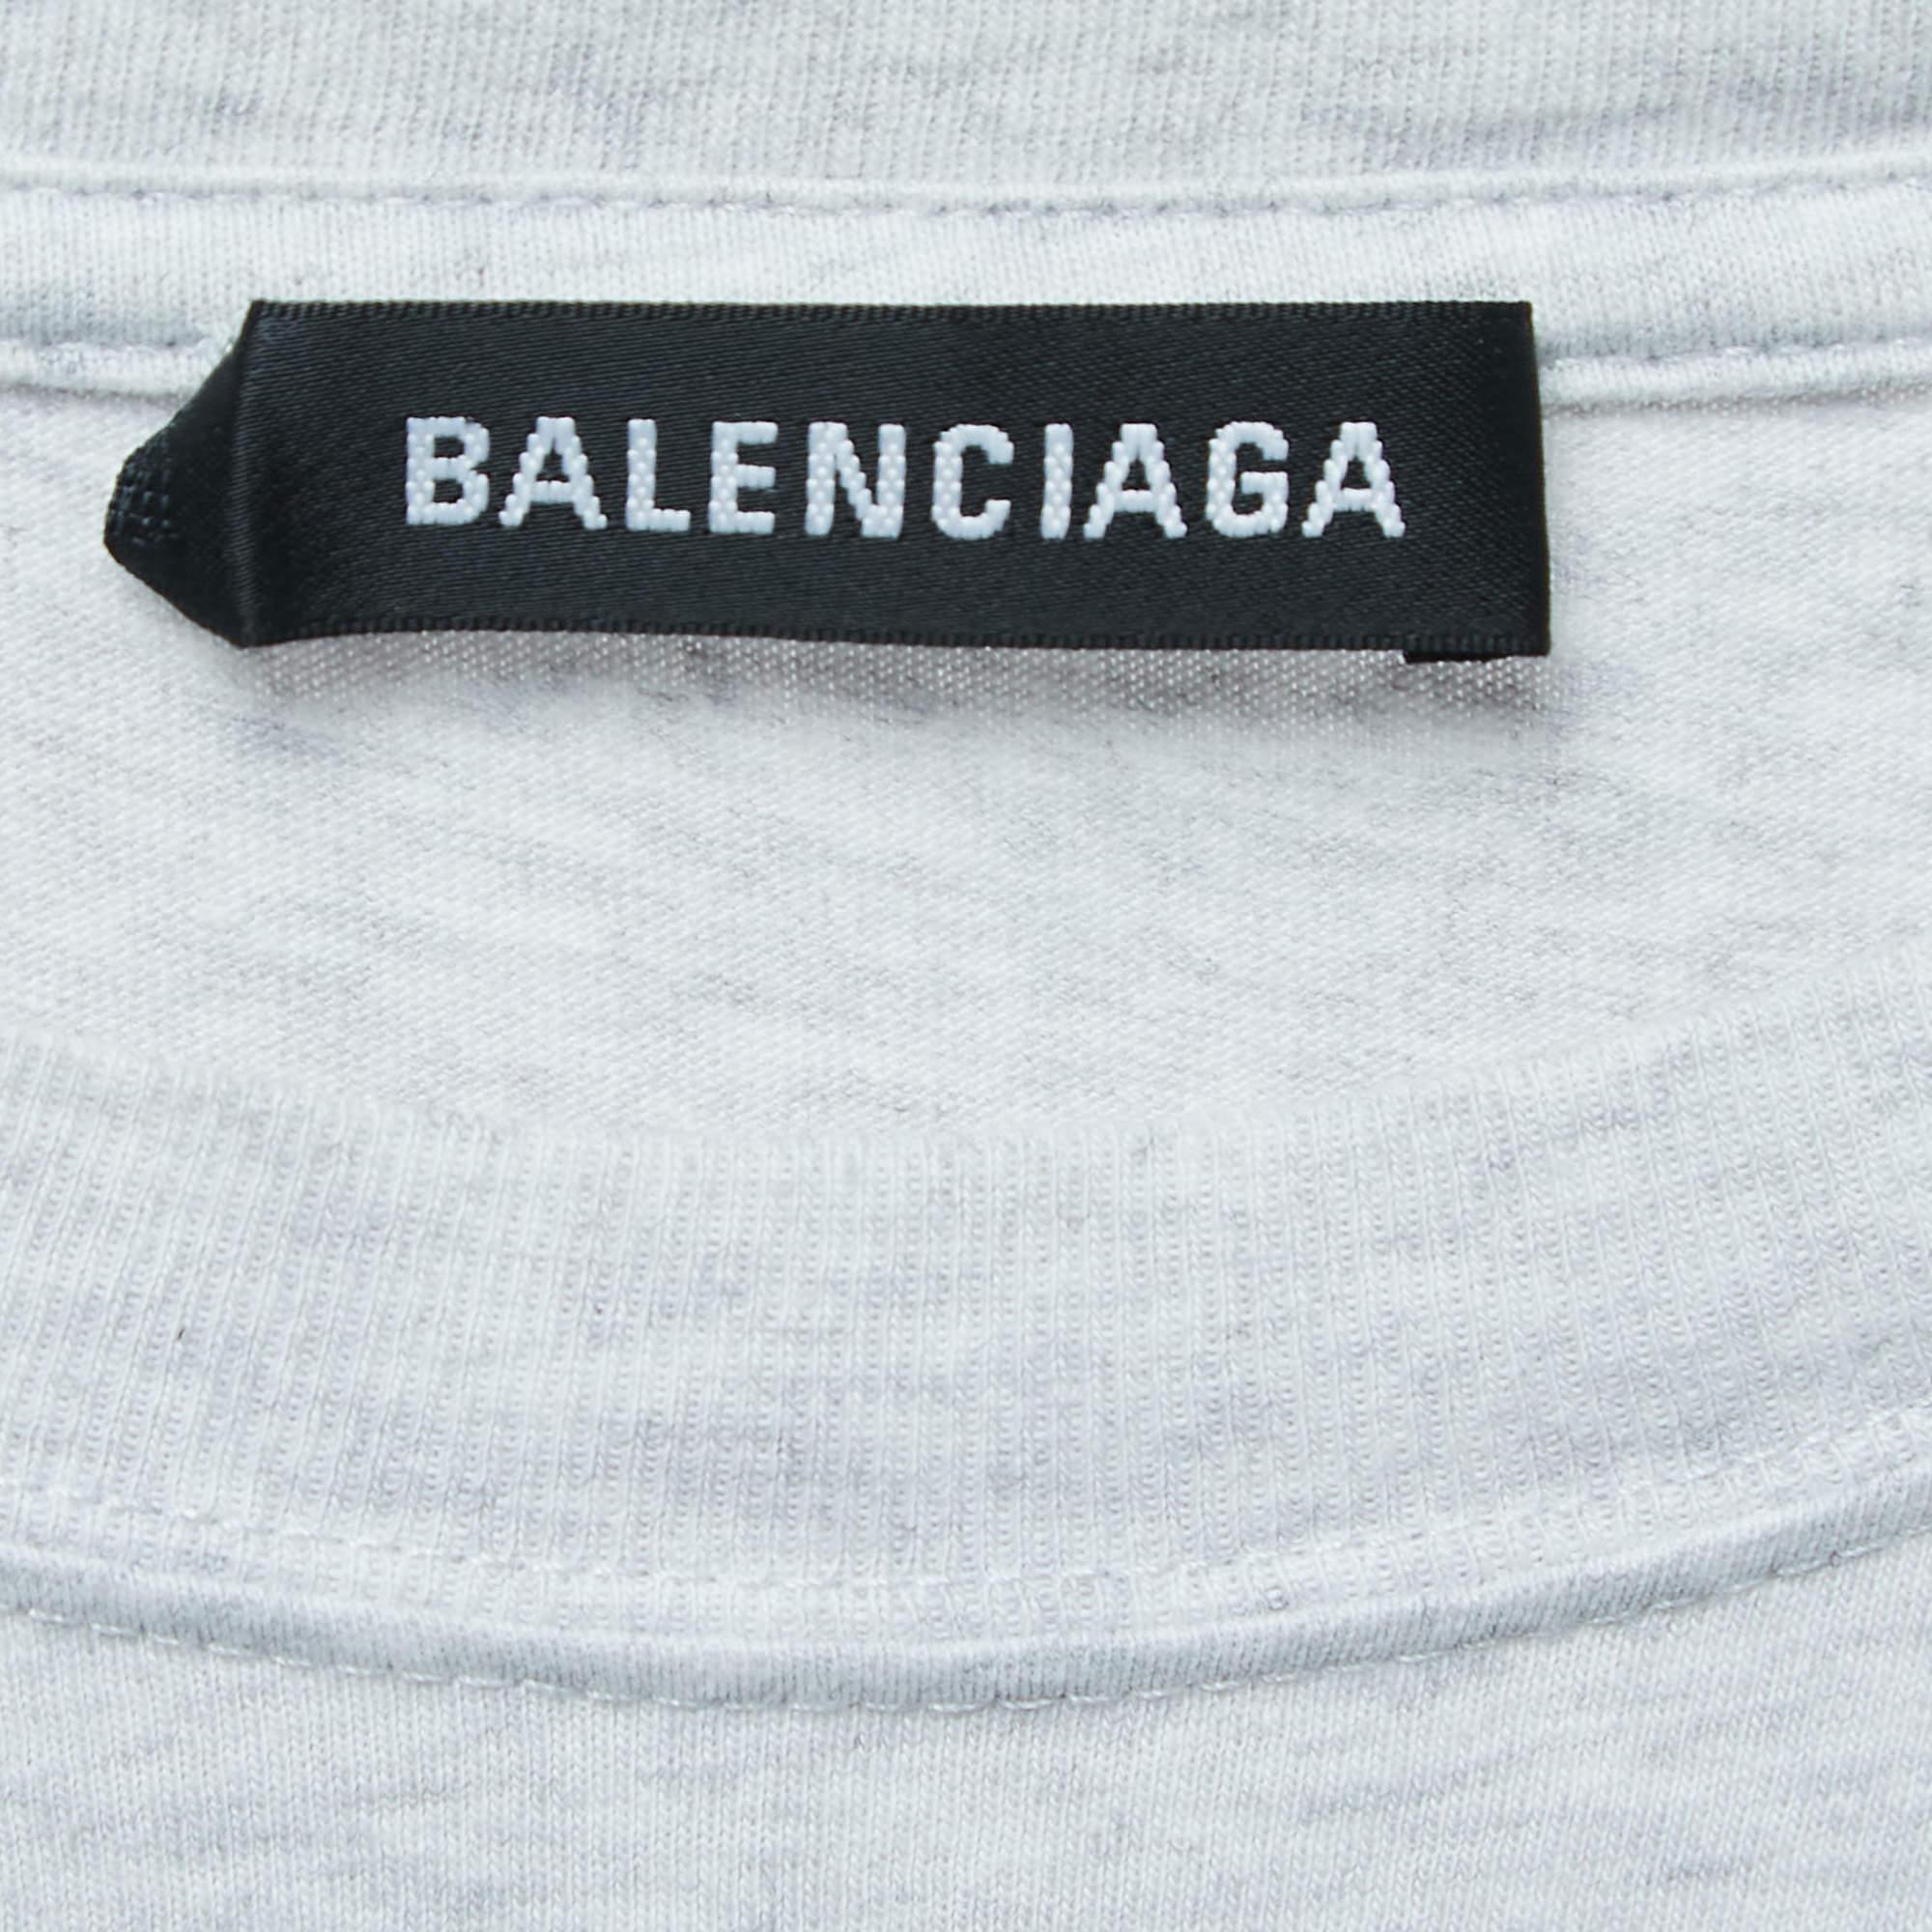 Balenciaga Grey Cotton Printed T-Shirt M For Sale 2